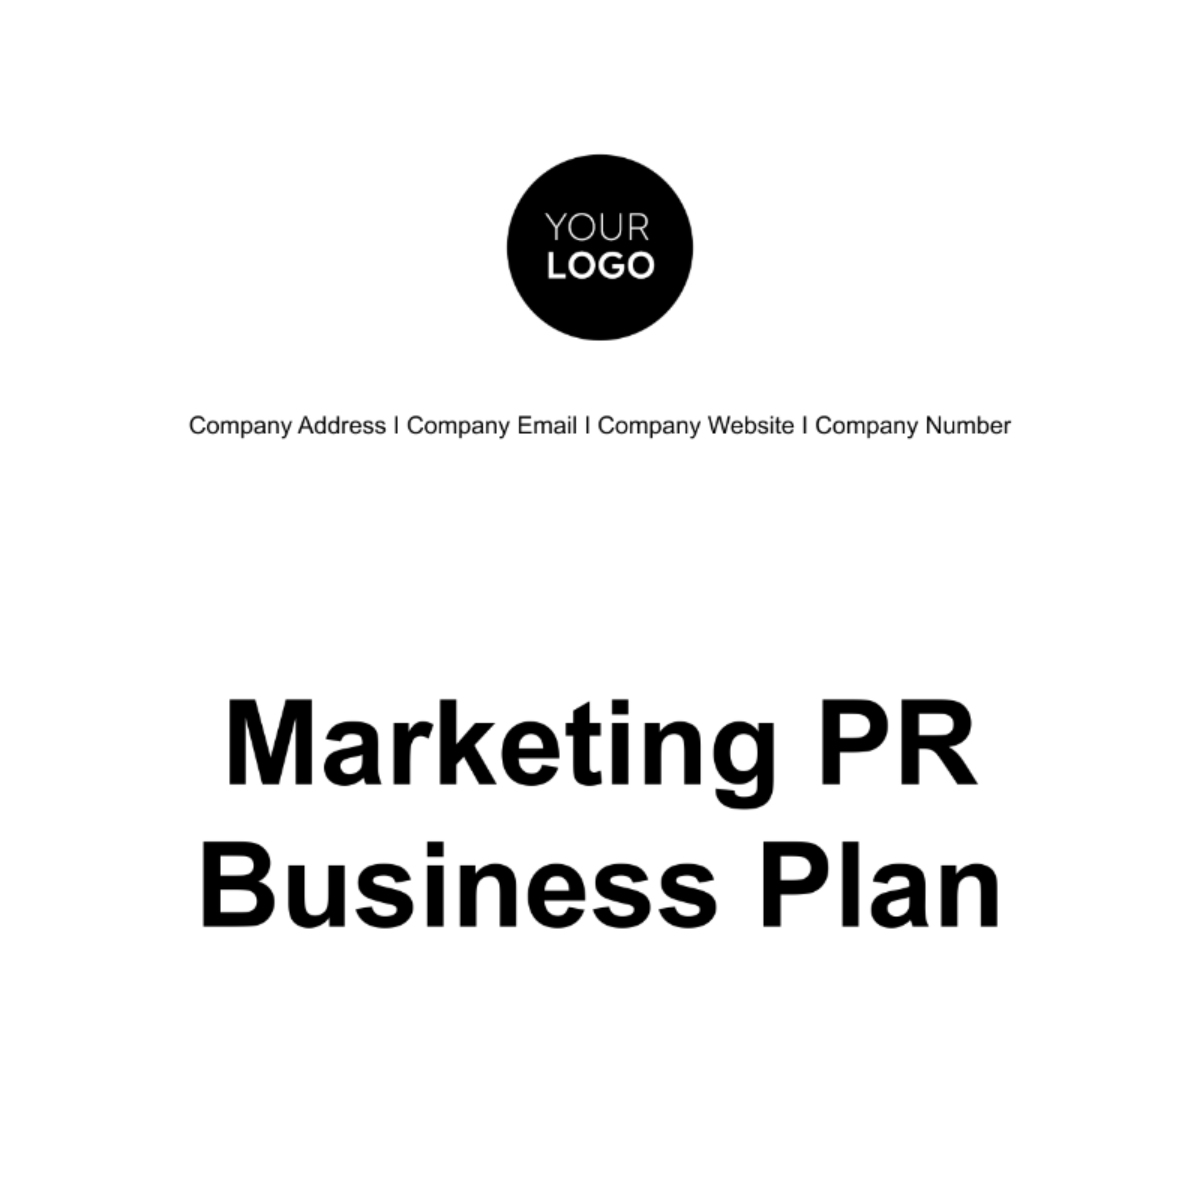 Marketing PR Business Plan Template